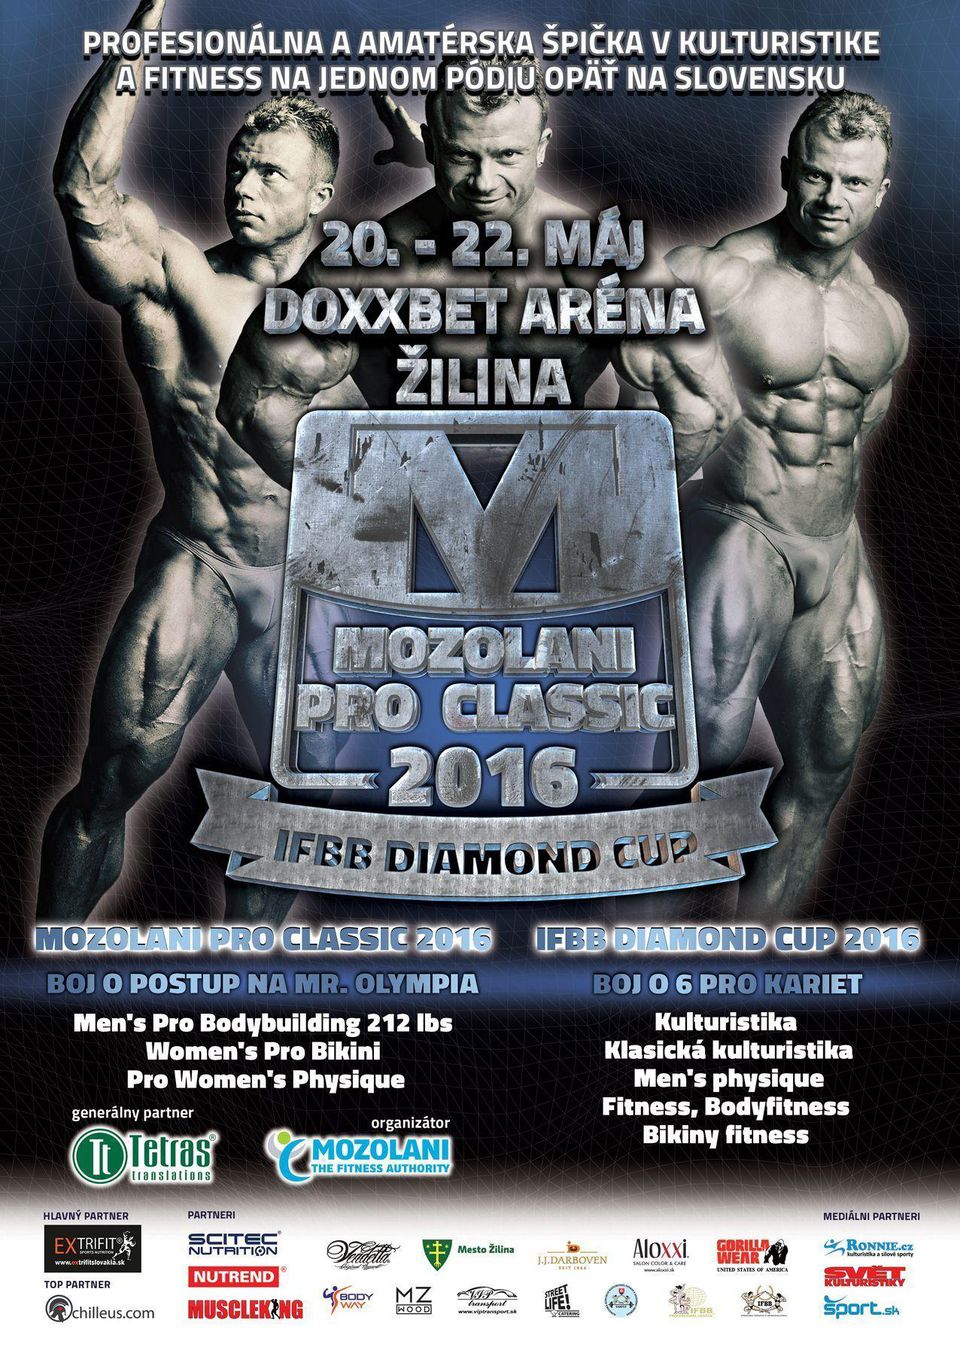 IFBB Diamond Cup Mozolani Pro Classic 2016 mozolani.com